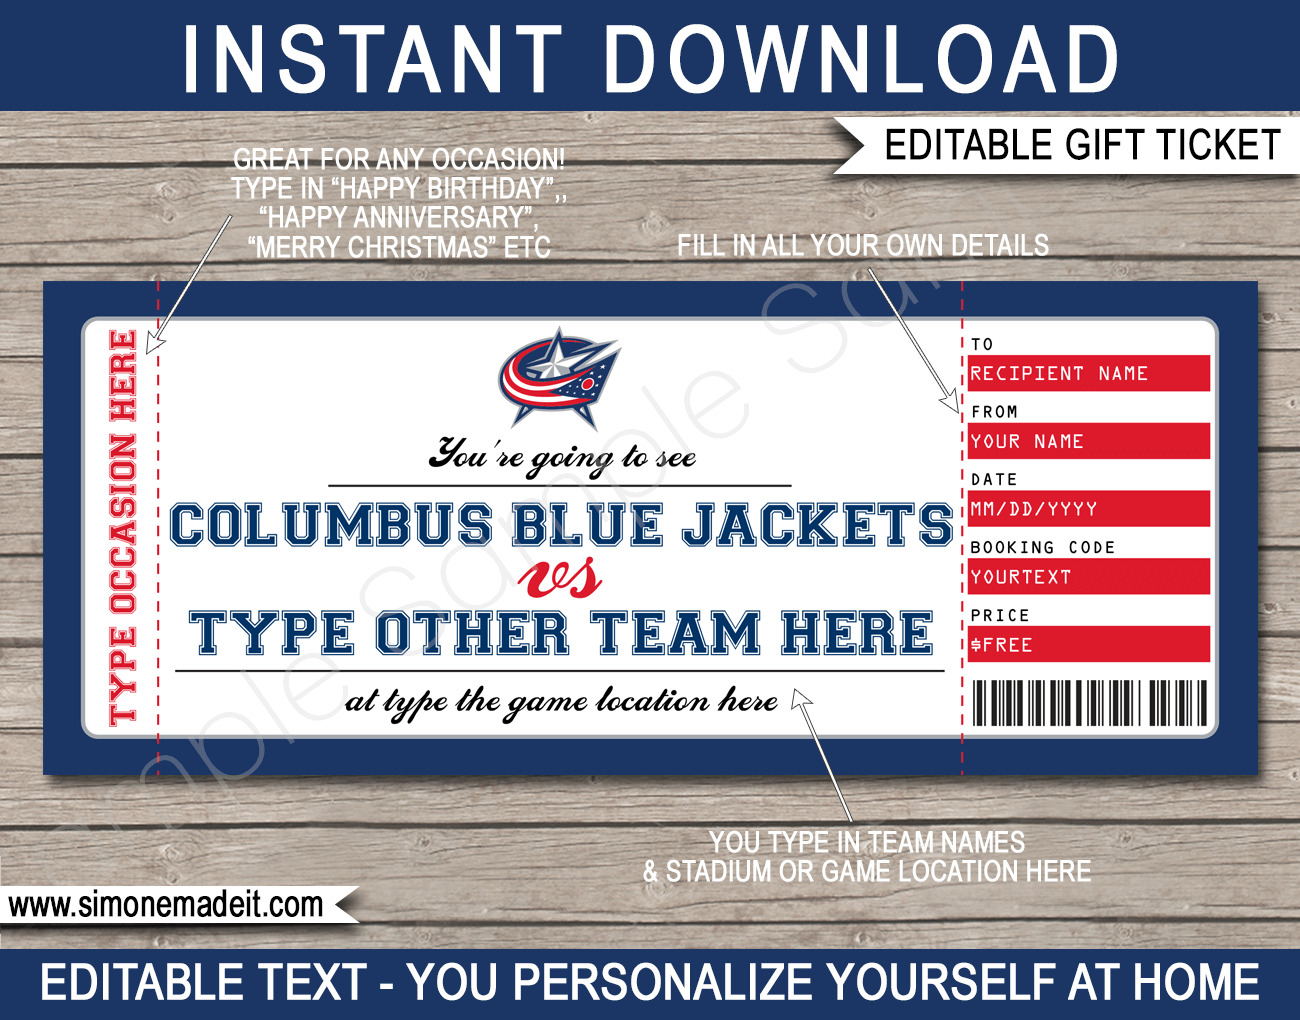 NHL - Columbus Blue Jackets; Two Mezzanine Level Tickets, eVoucher